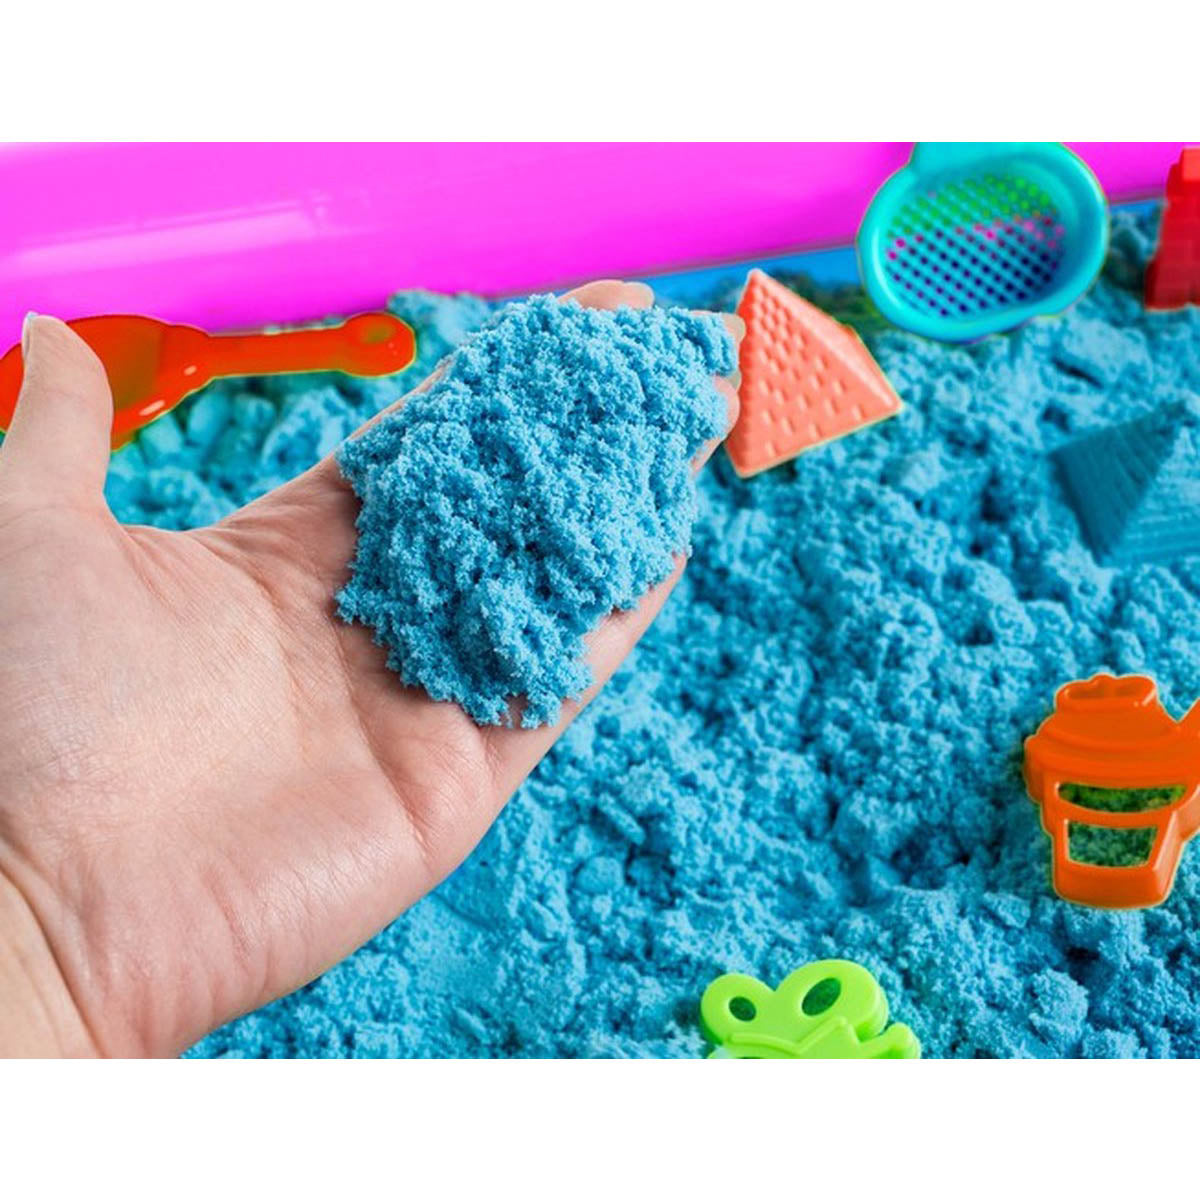 Ariko Magic Sand, 1 KG - Zand voor Binnenhuis met Accessoires - 14 mallen - Opblaasbare zandbak